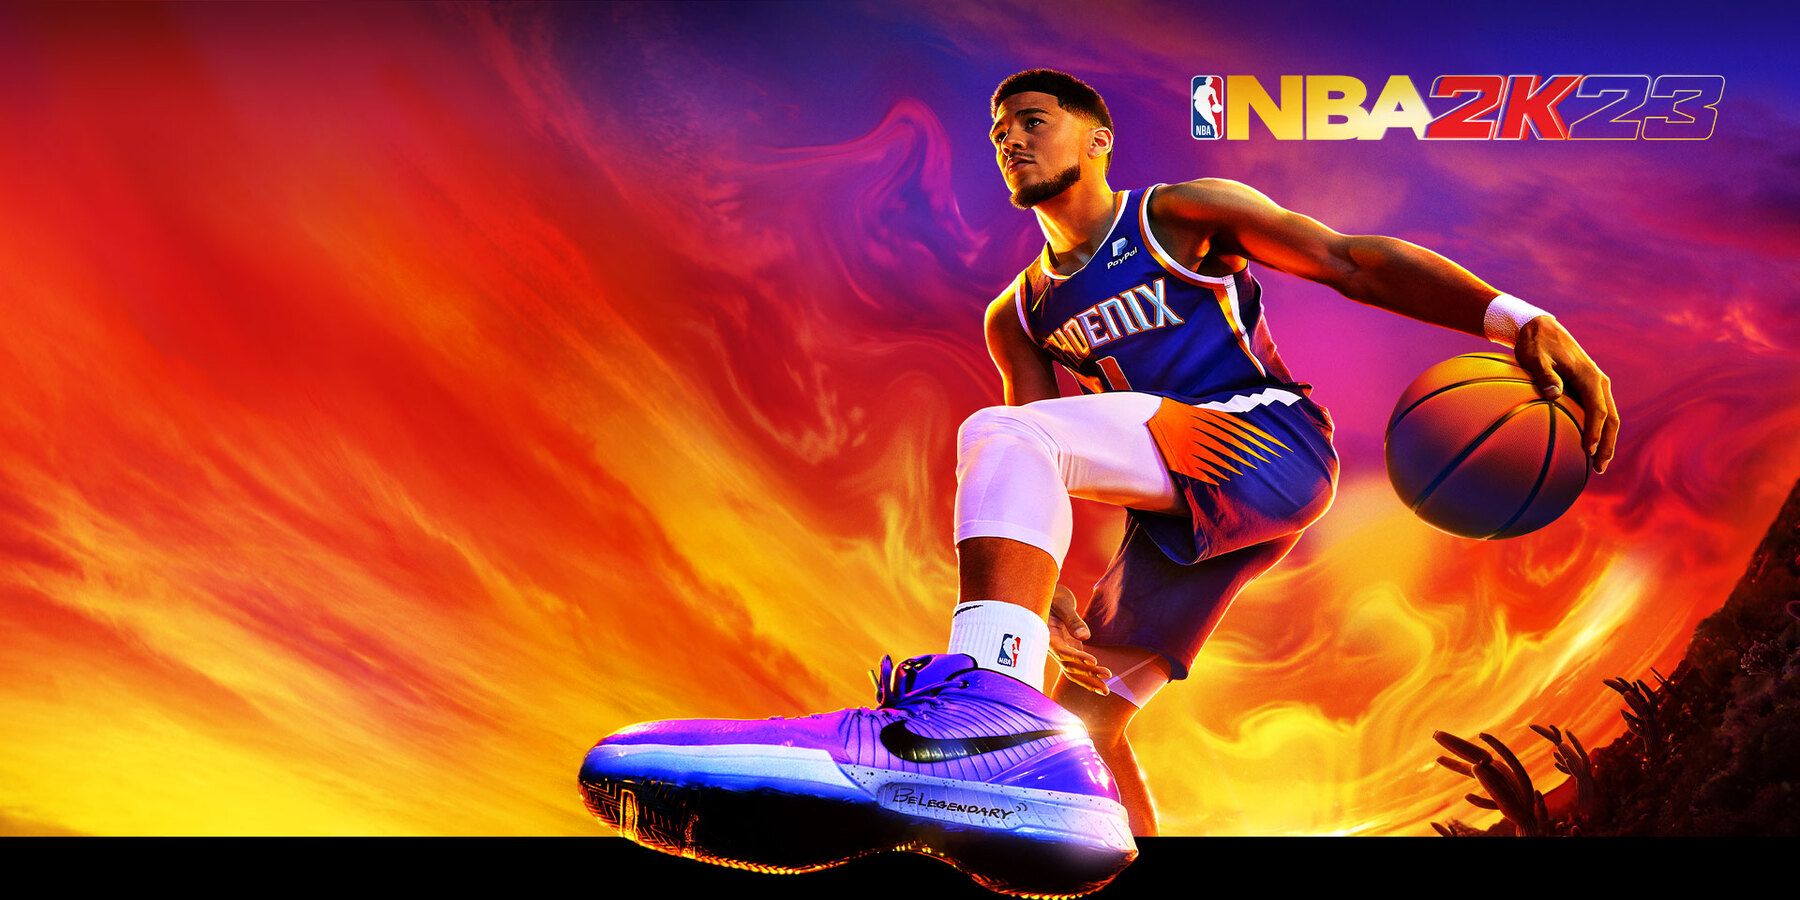 NBA 2K23 MyCareer Trailer! J. Cole Cover Dreamer Edition! 